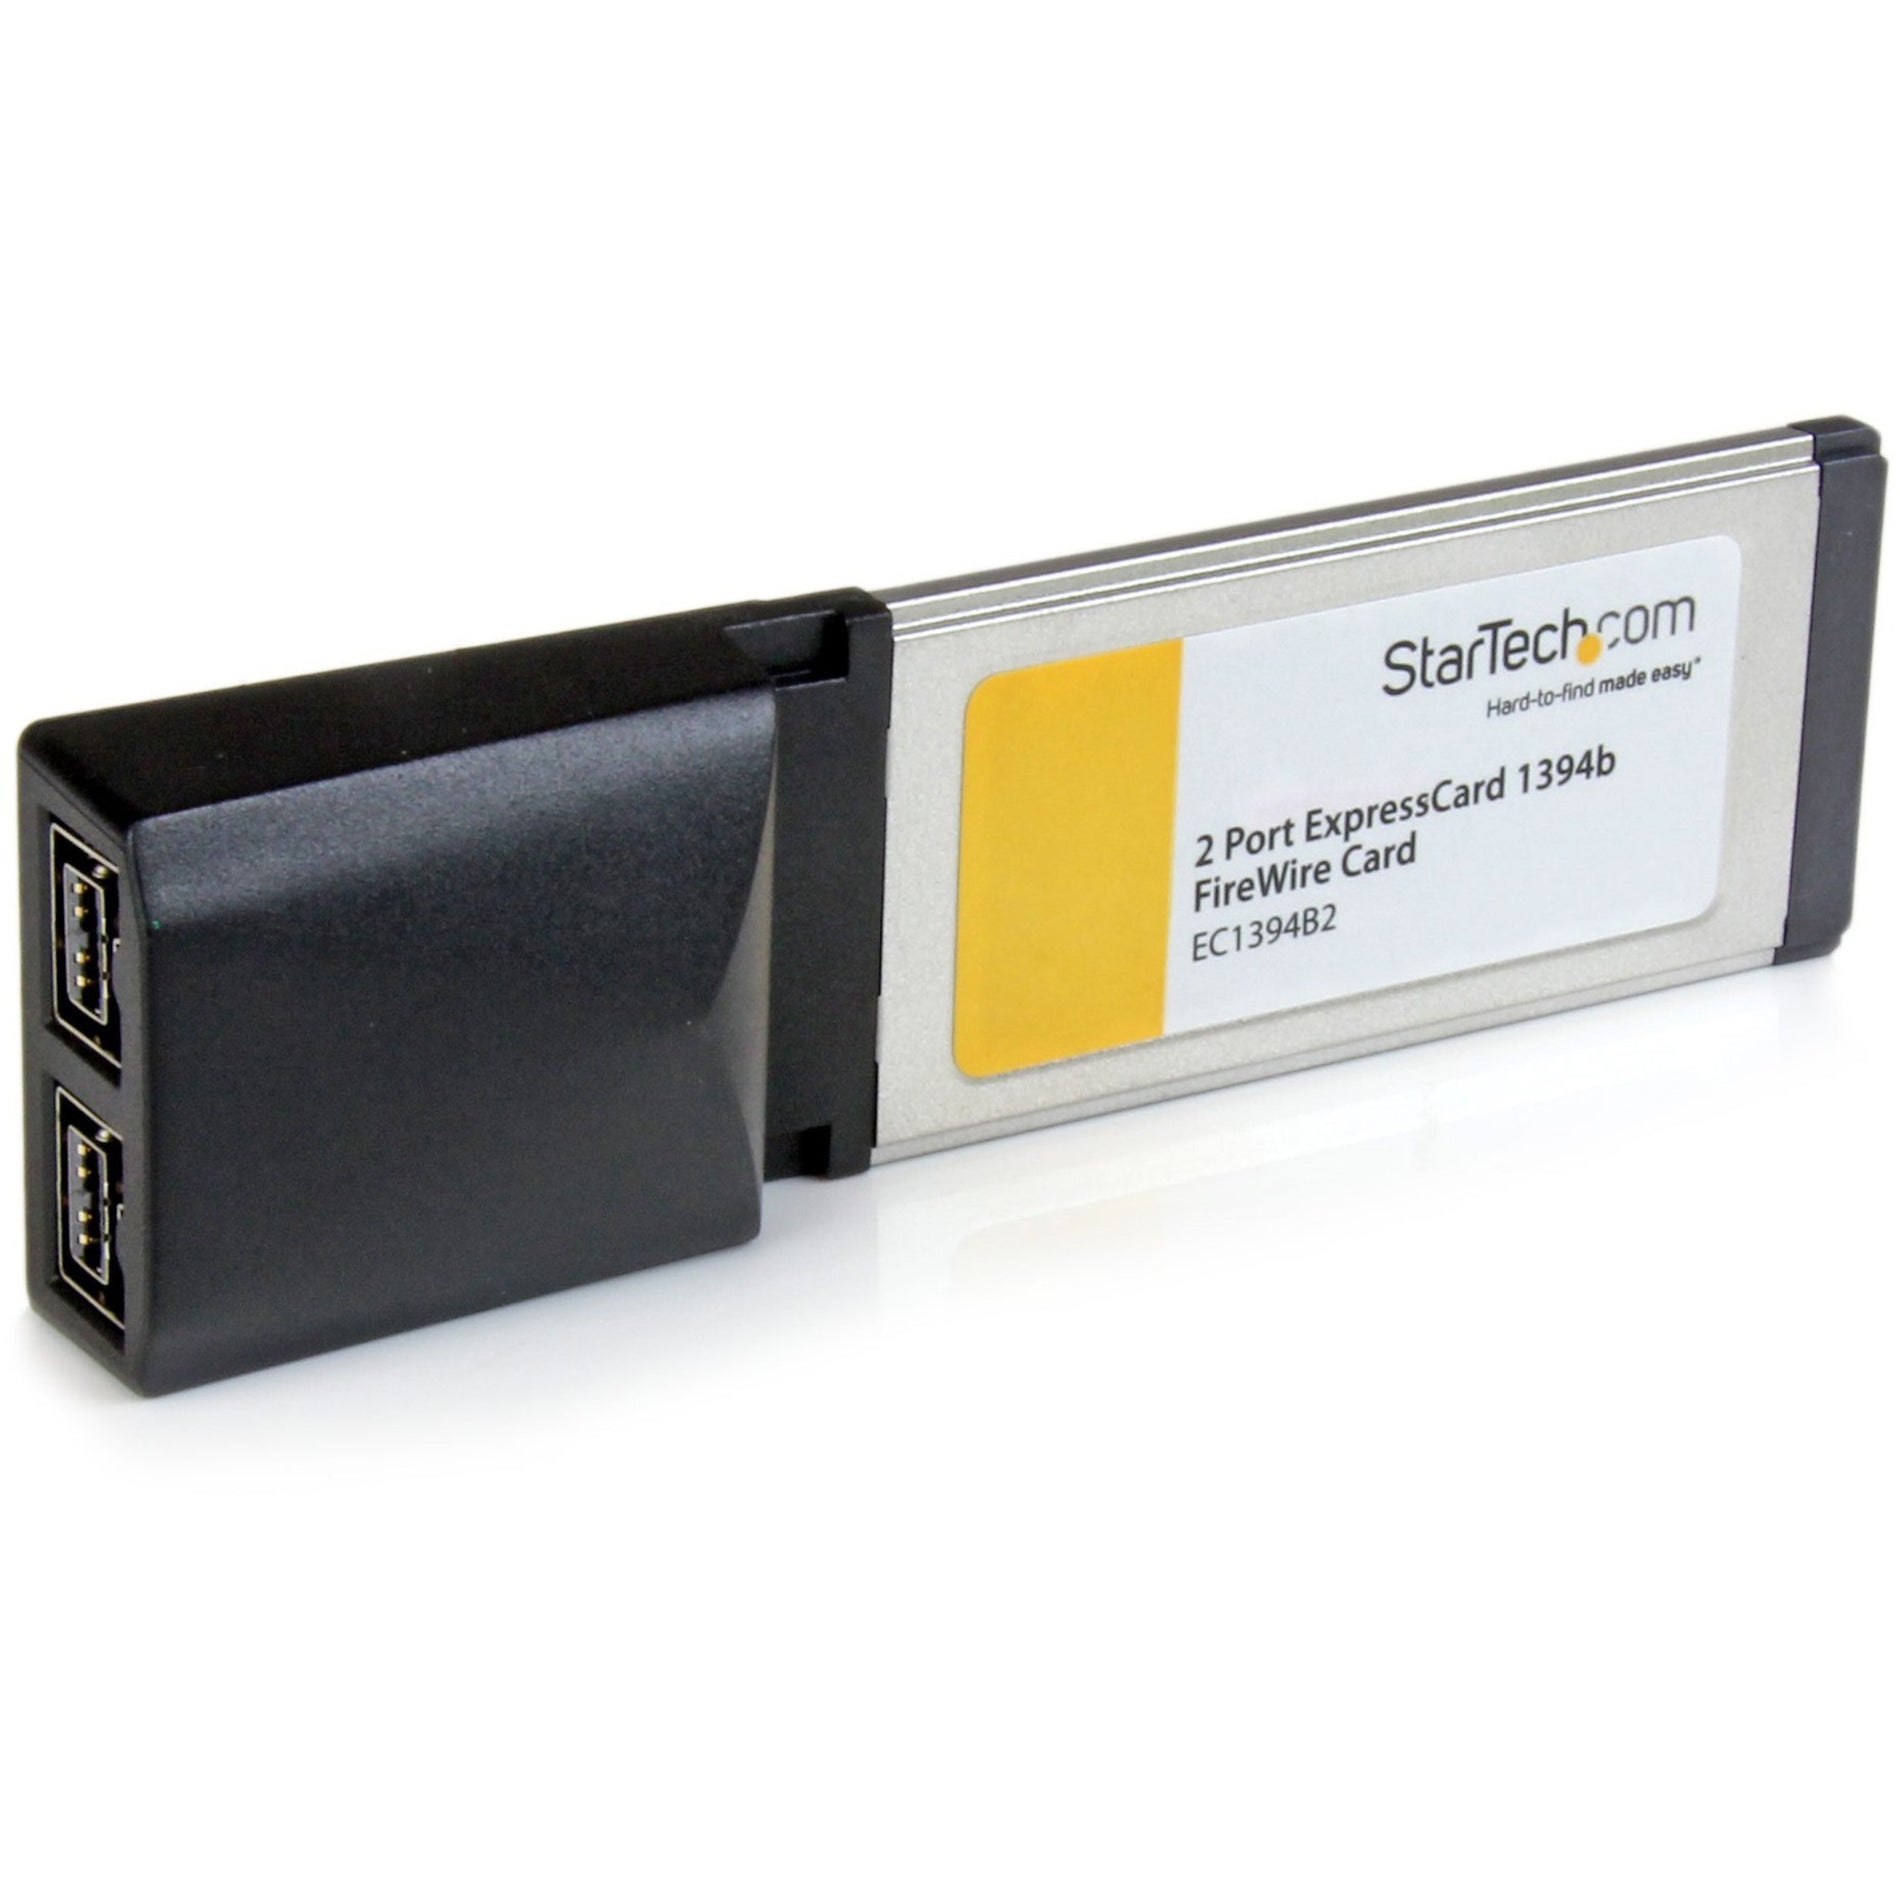 StarTech.com EC1394B2 2 Port ExpressCard FireWire Adapter Card, Add 2 FireWire800 Ports to Your Laptop [Discontinued]